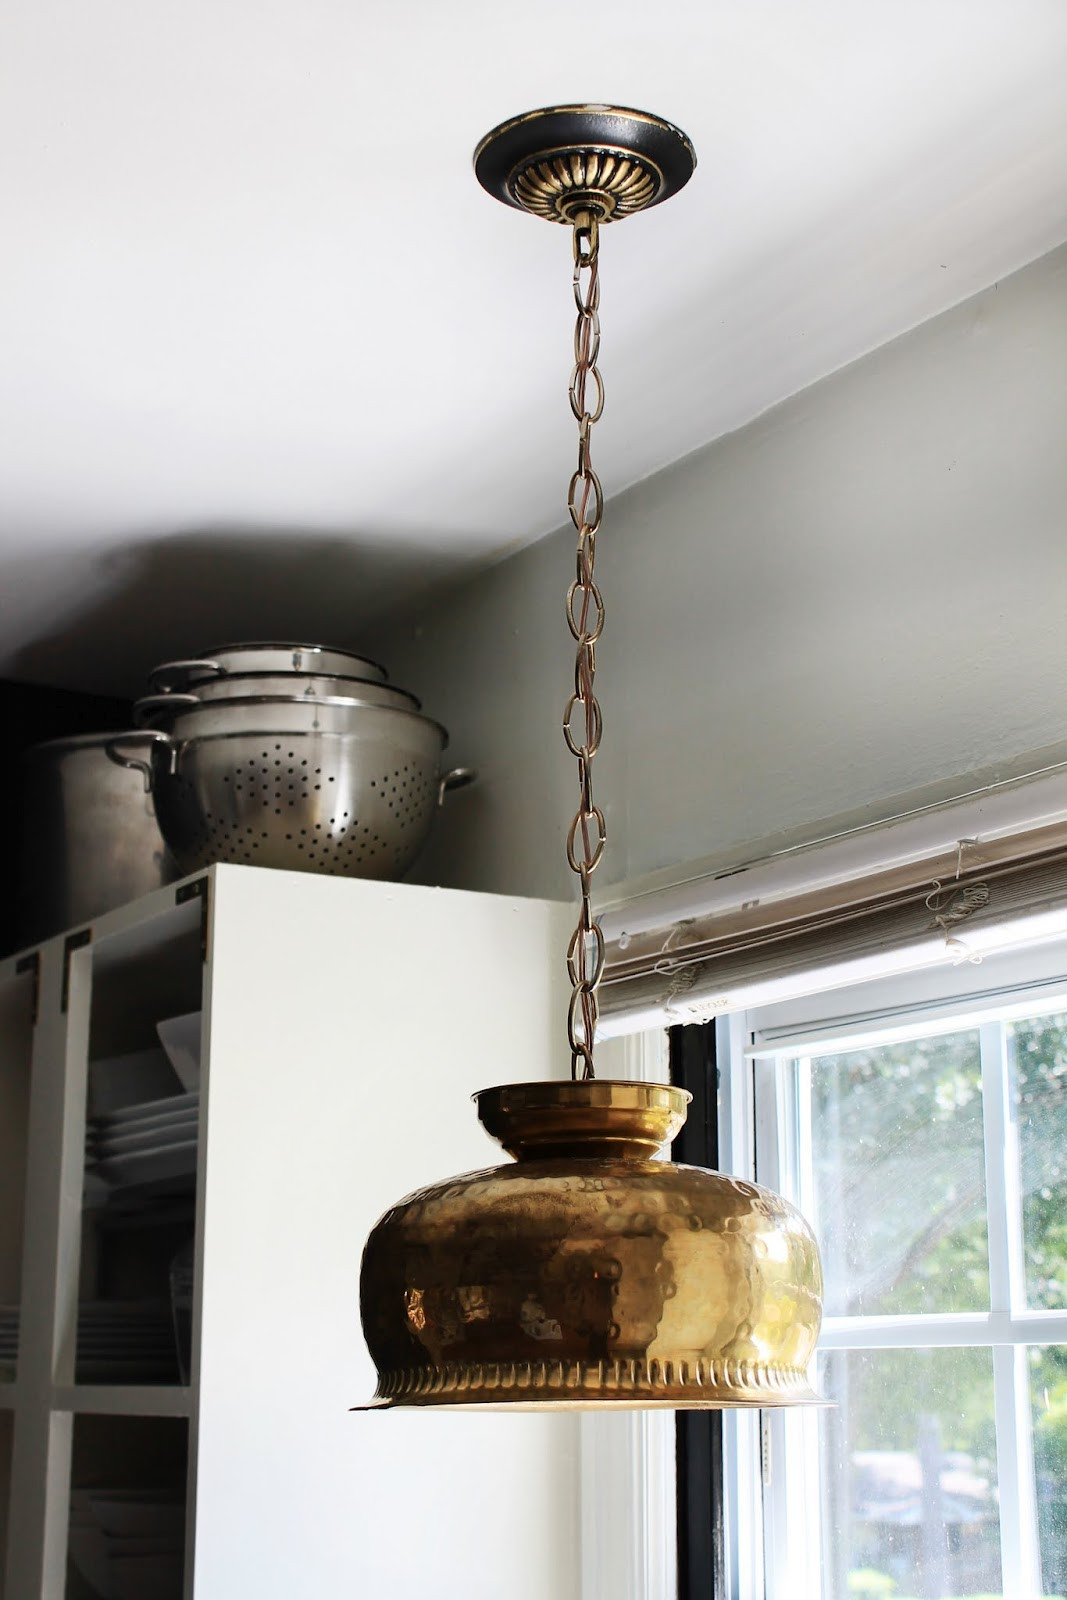 Best ideas about DIY Kitchen Lighting
. Save or Pin hunted interior DIY Brass Bowl Pendant Kitchen Sneak Peek Now.